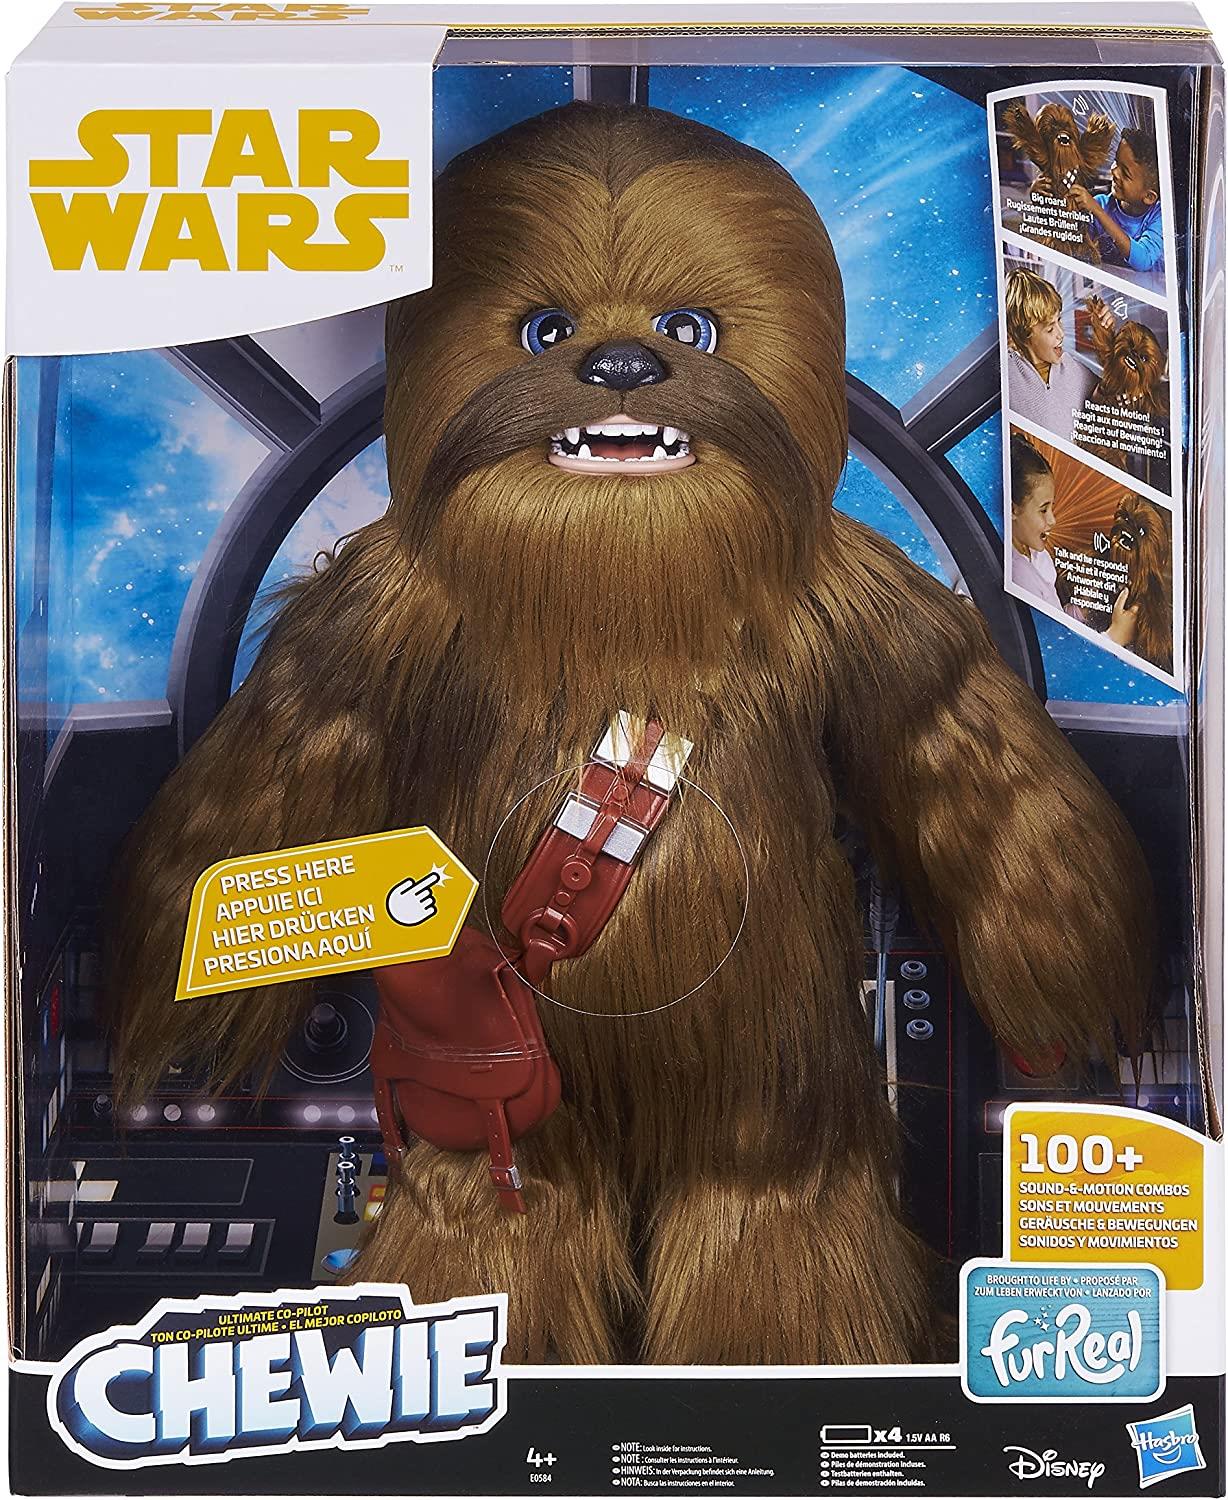 Star Wars Star Wars furReal Toy Star Wars Galactic Heroes Ultimate Co-pilot Chewie